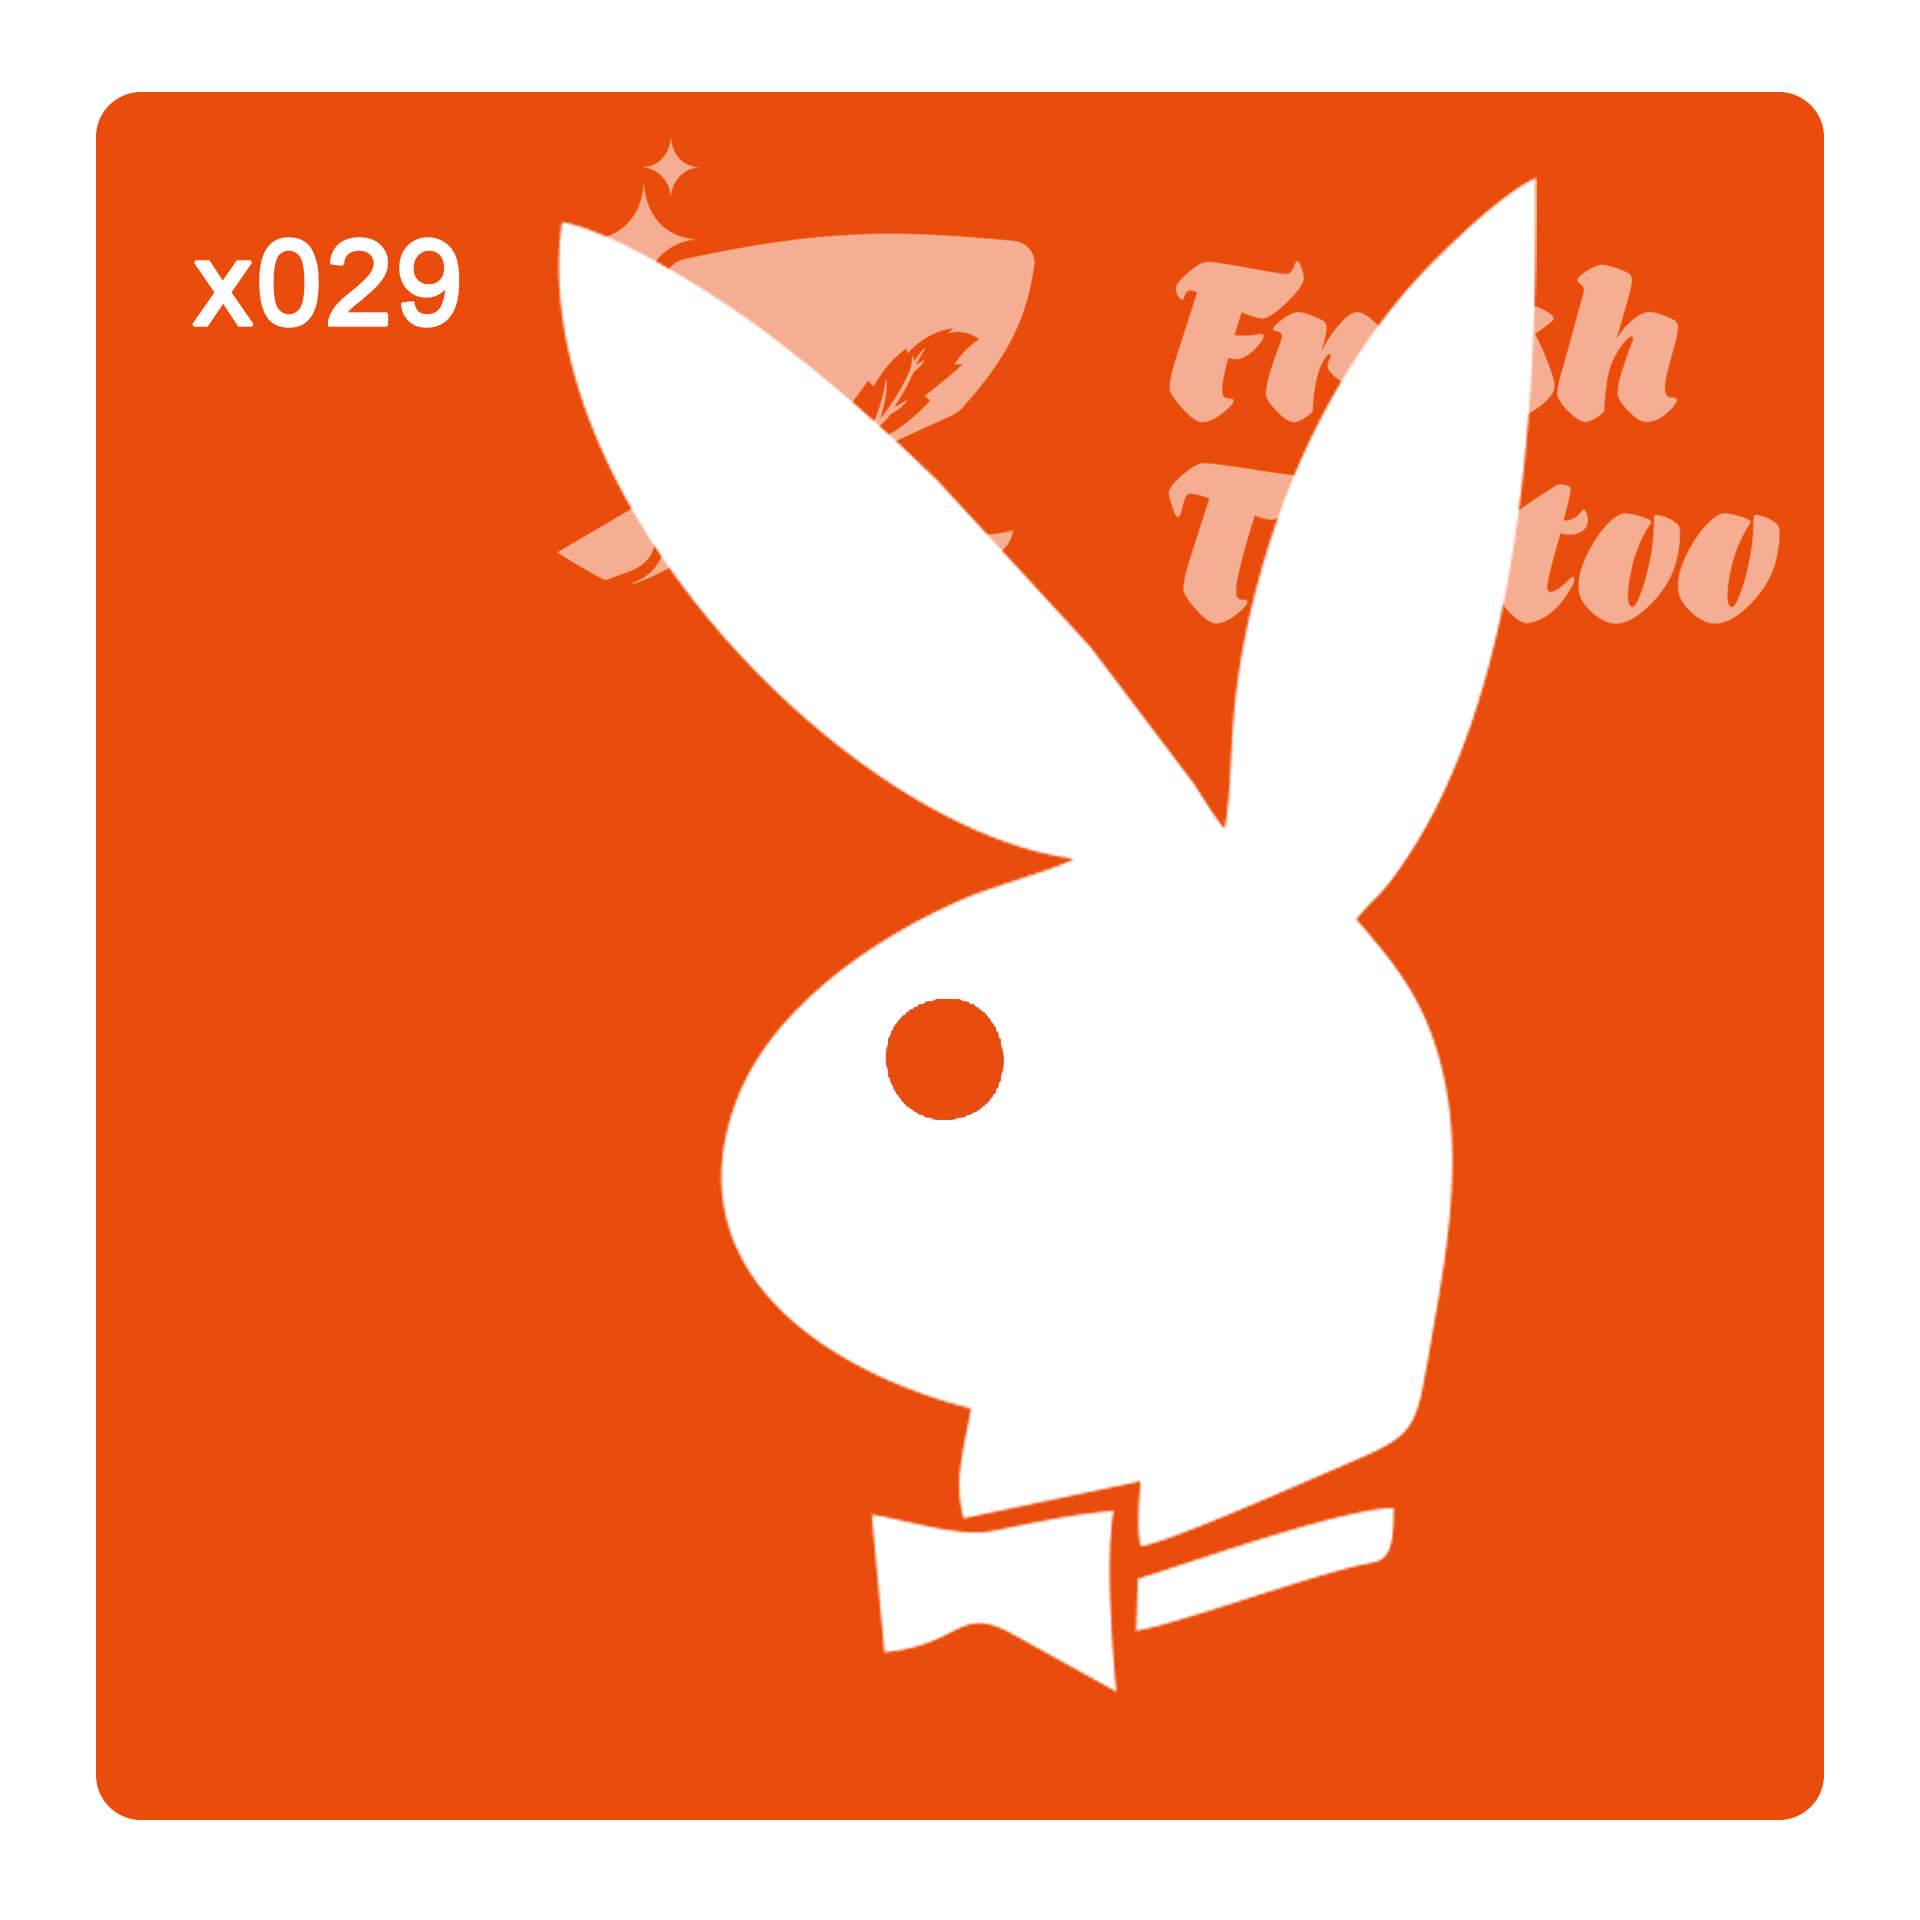  Playboy x029  